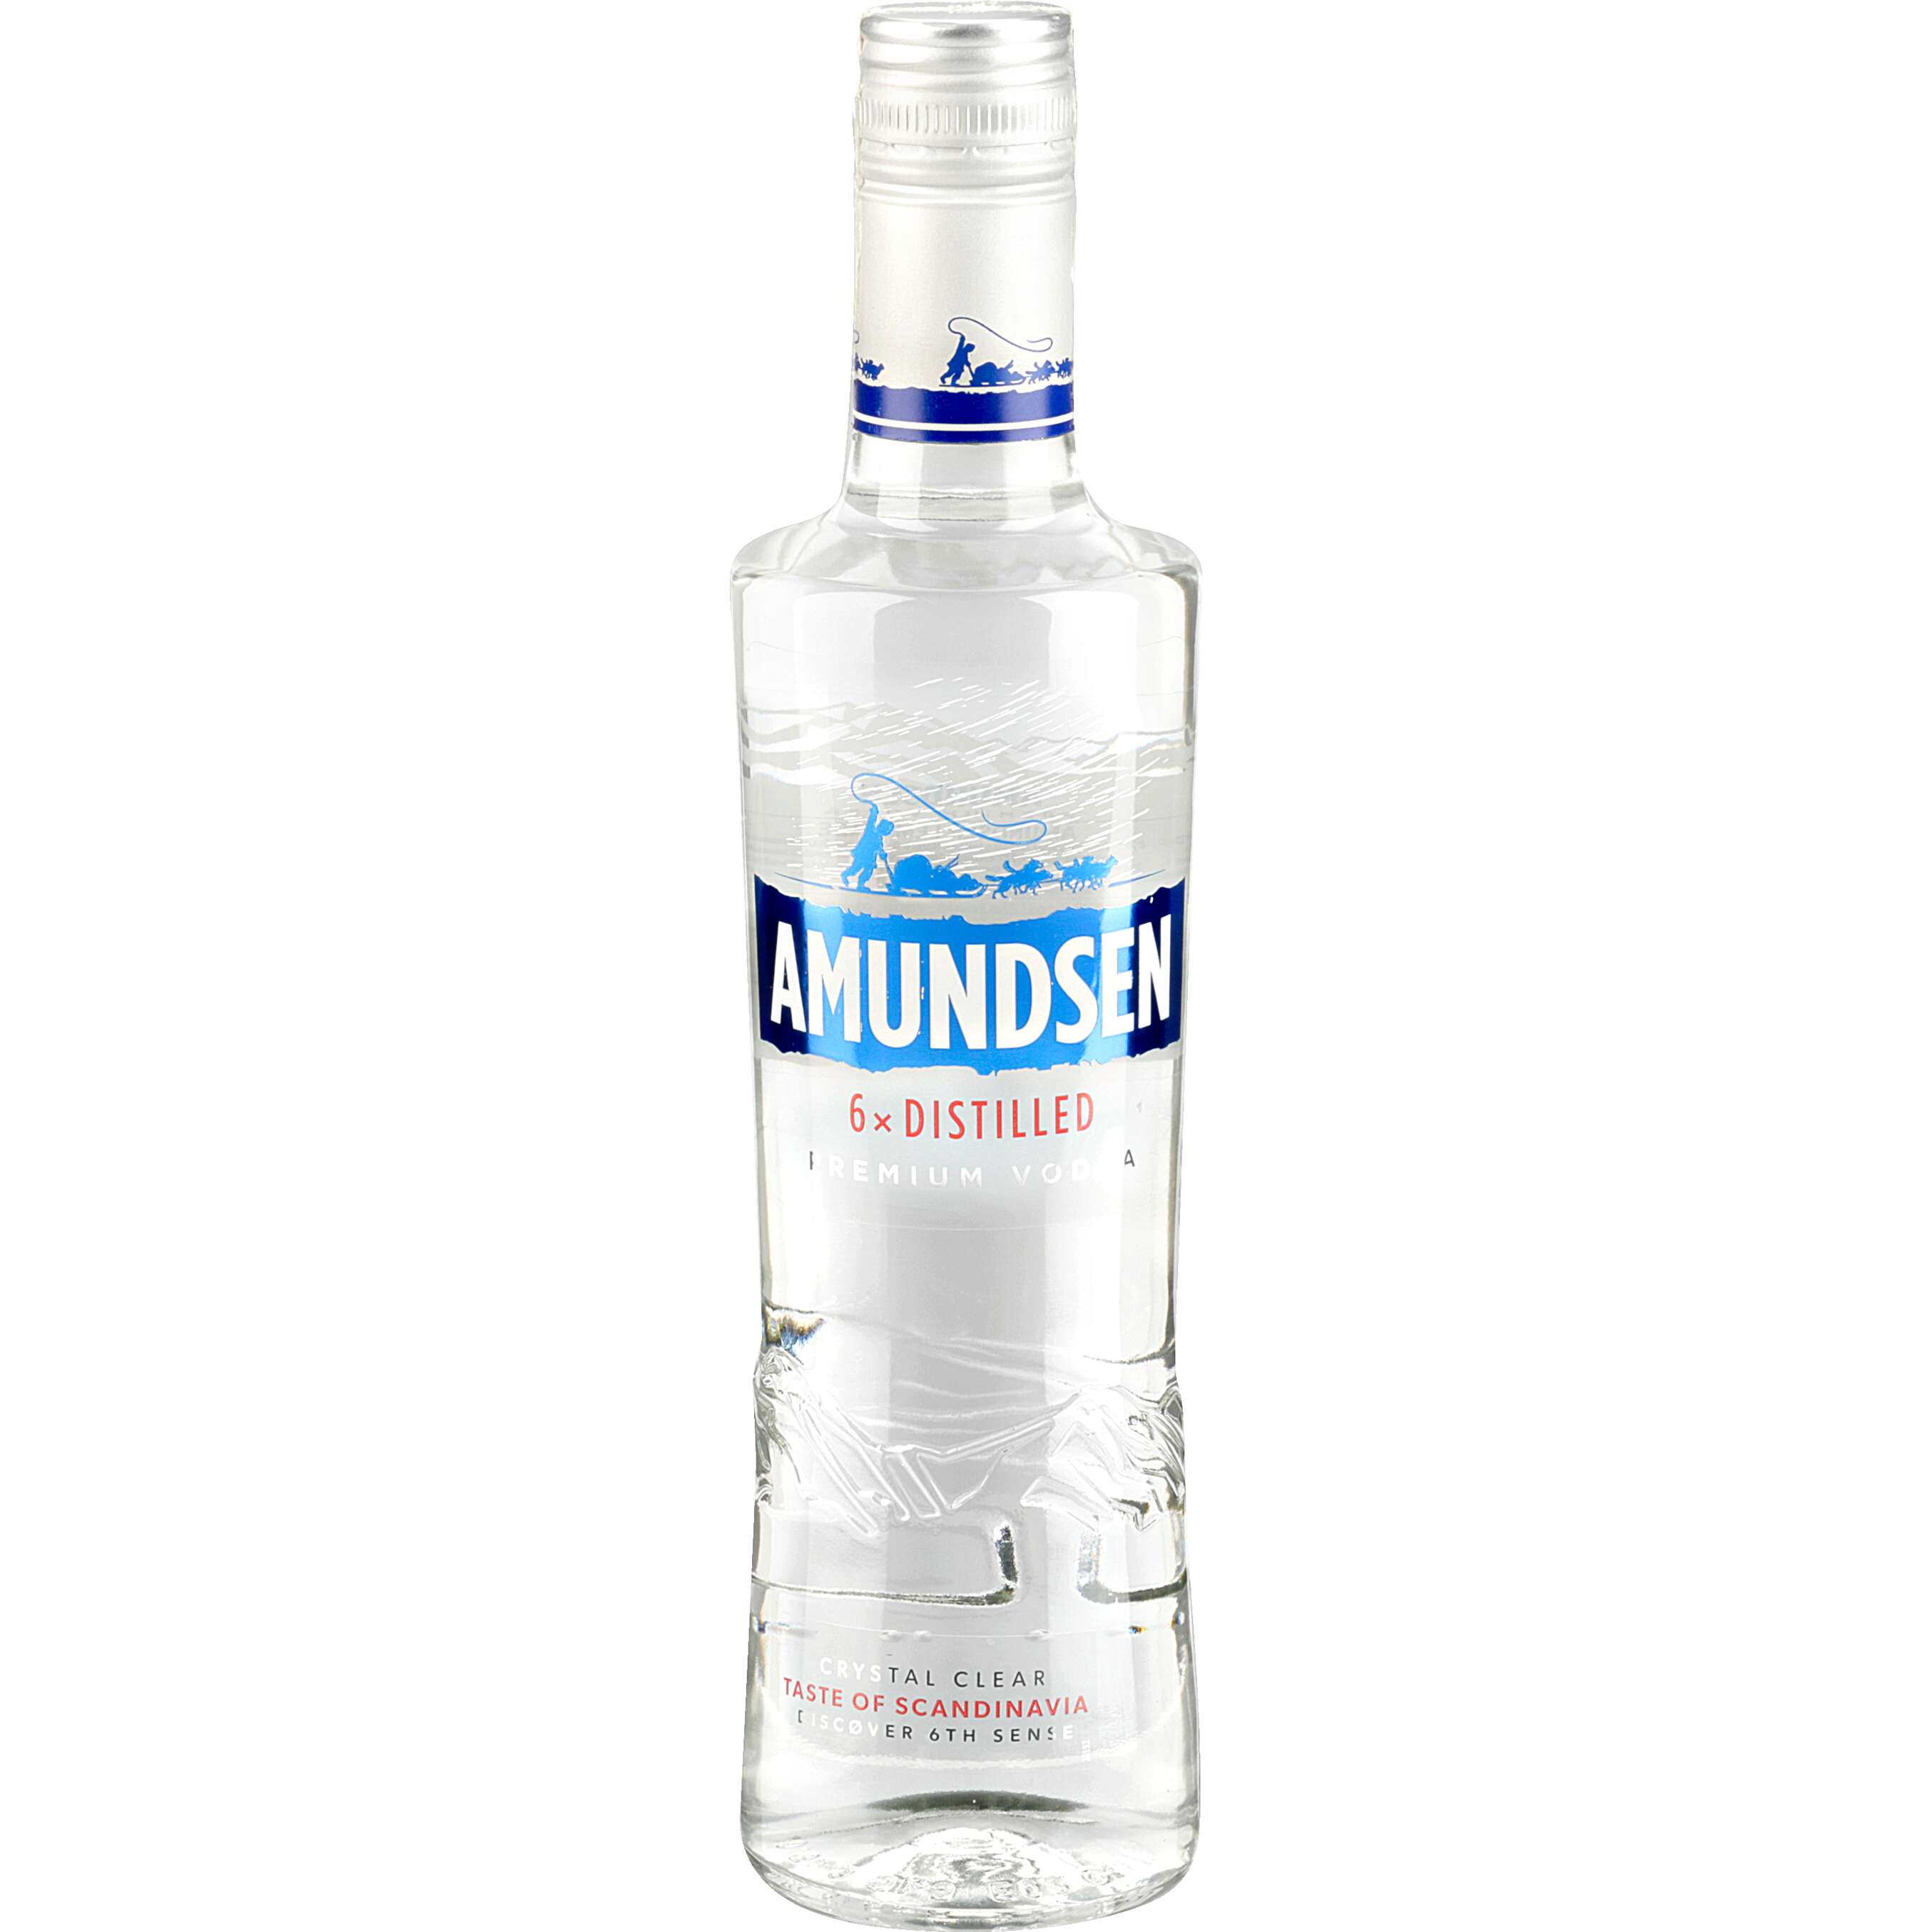 Zobrazit nabídku Amundsen Vodka premium/polar spice 37,5%